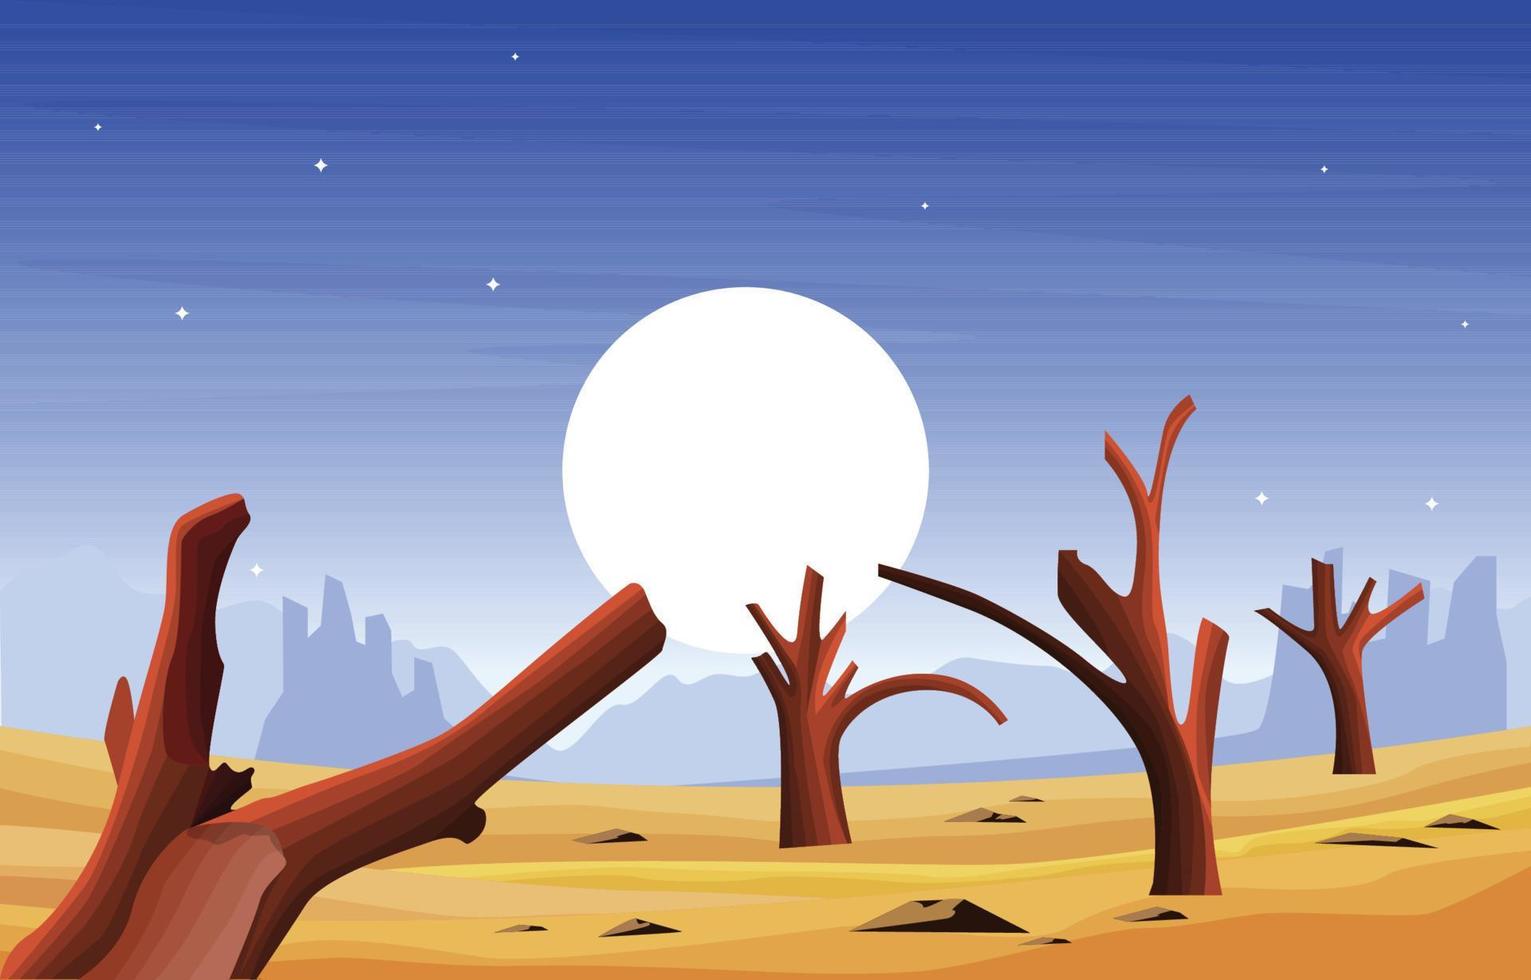 Horizon Sky Western American Dead Tree Vast Desert Landscape Illustration vector